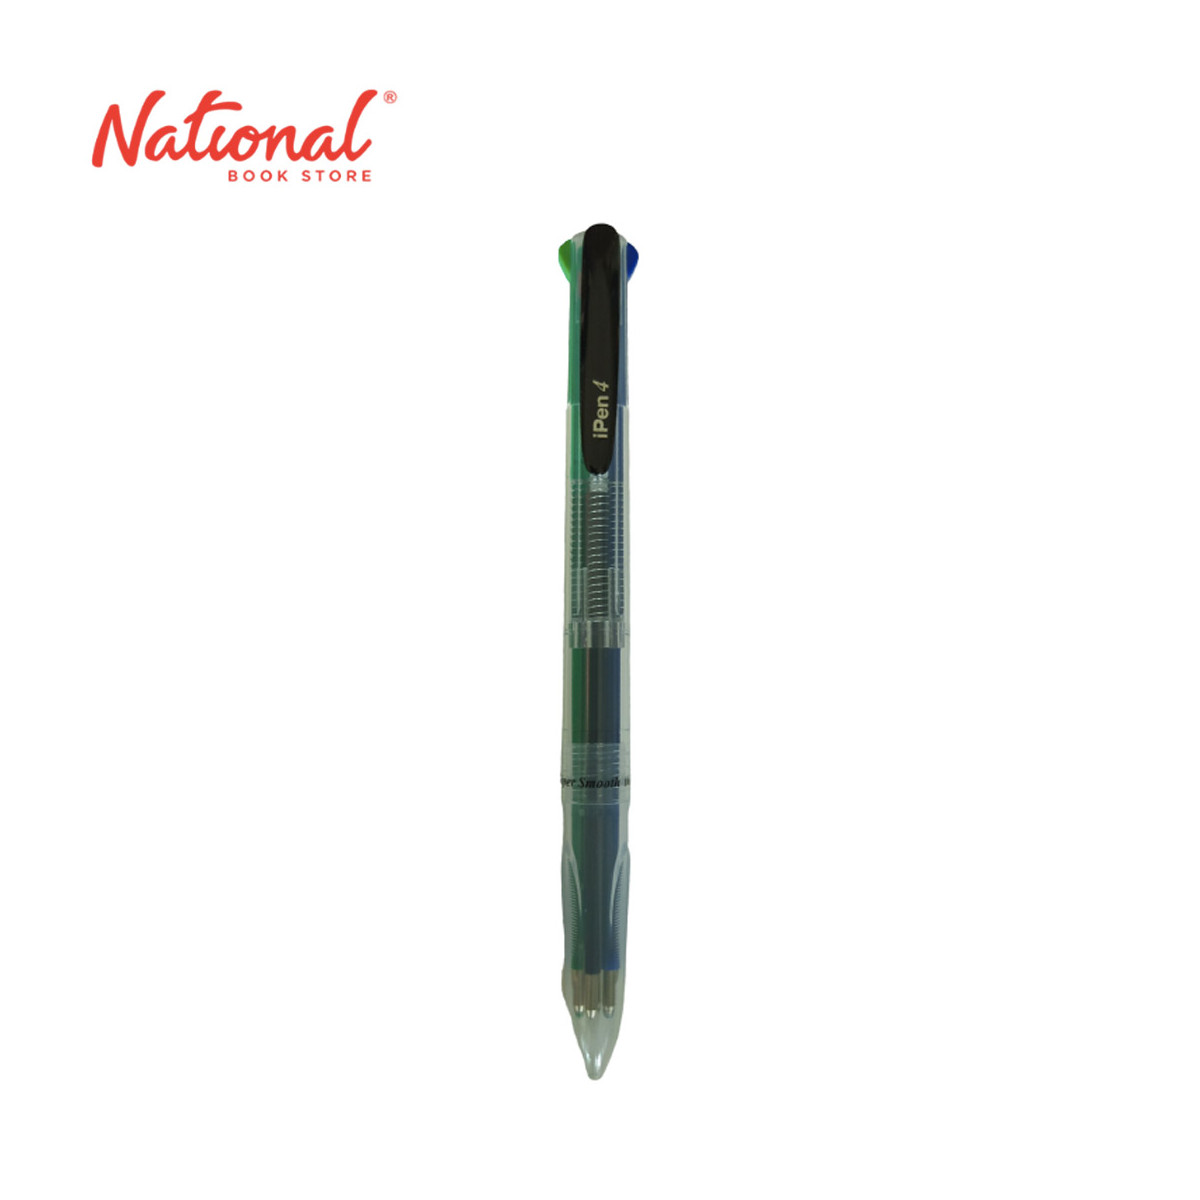 Crystal Ipen4 Ballpoint Pen Retractable 1.0mm 4-Color Black/Blue/Red/Green - Ballpens